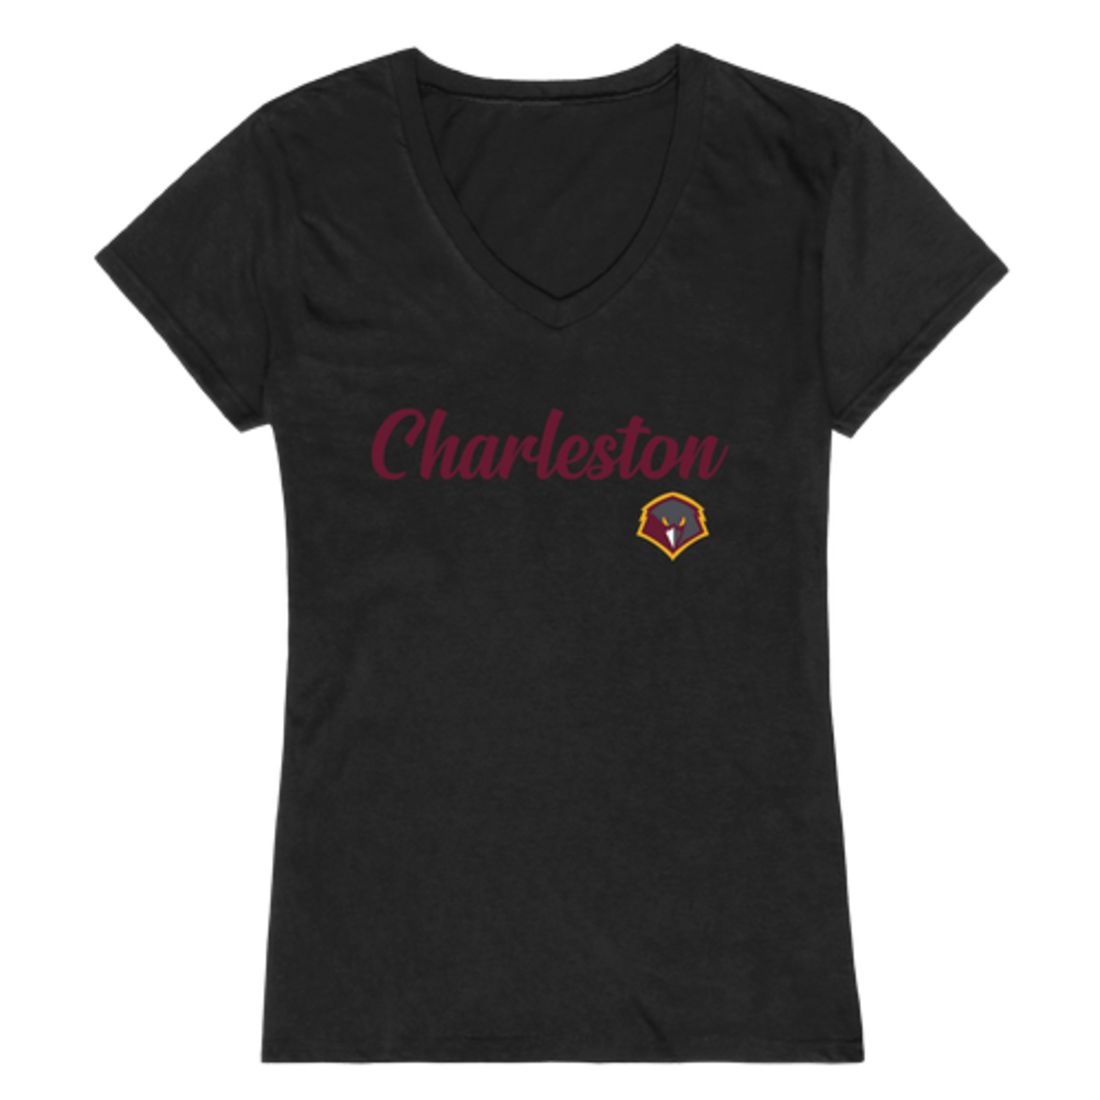 University of Charleston Golden Eagles Womens Script T-Shirt Tee